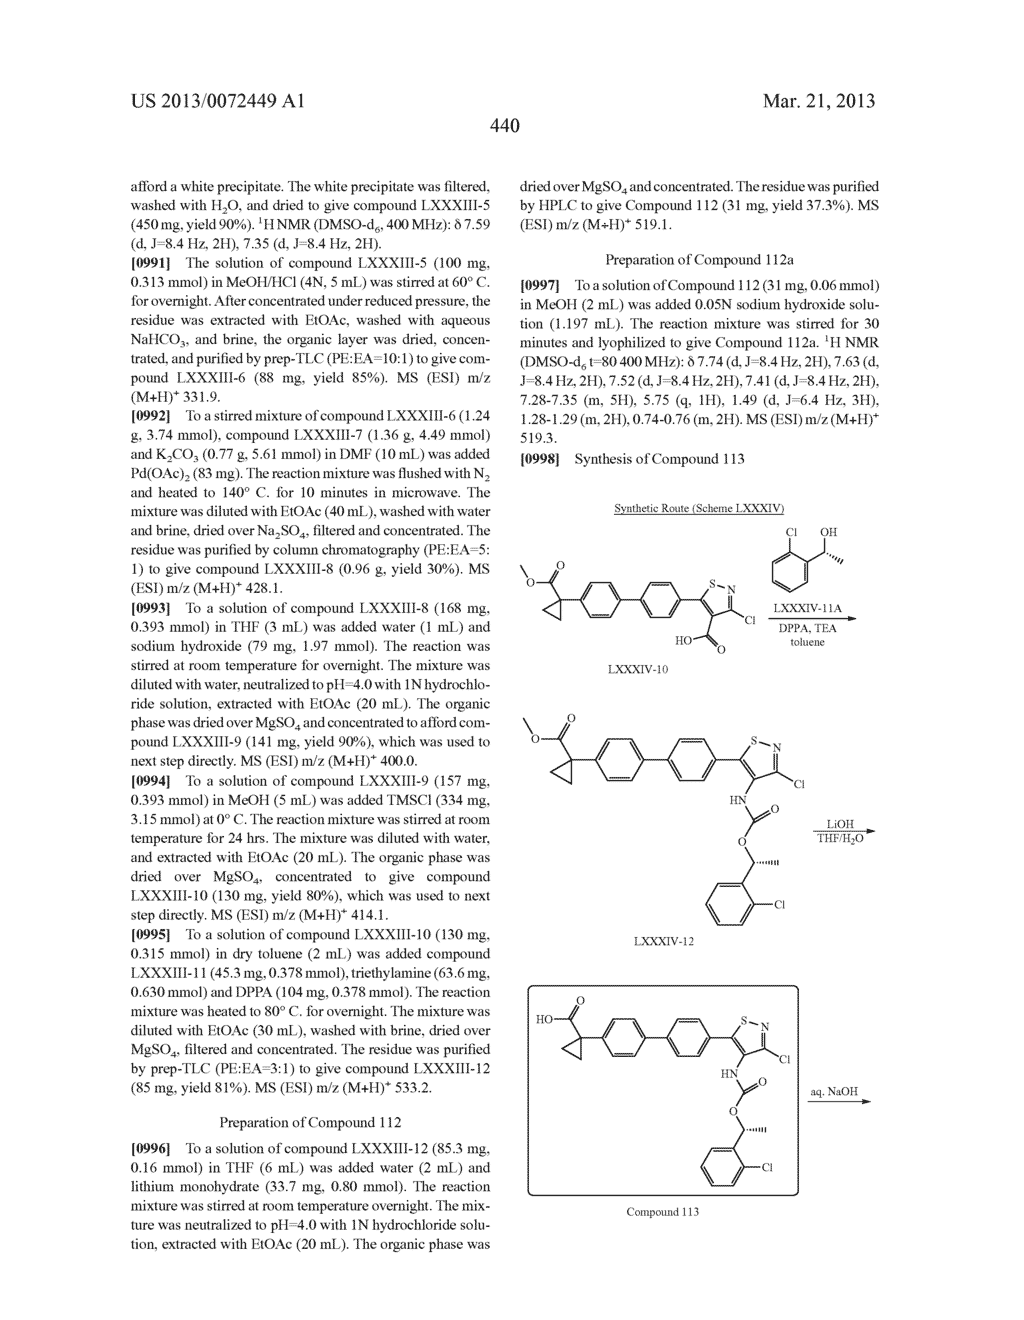 LYSOPHOSPHATIDIC ACID RECEPTOR ANTAGONISTS - diagram, schematic, and image 441